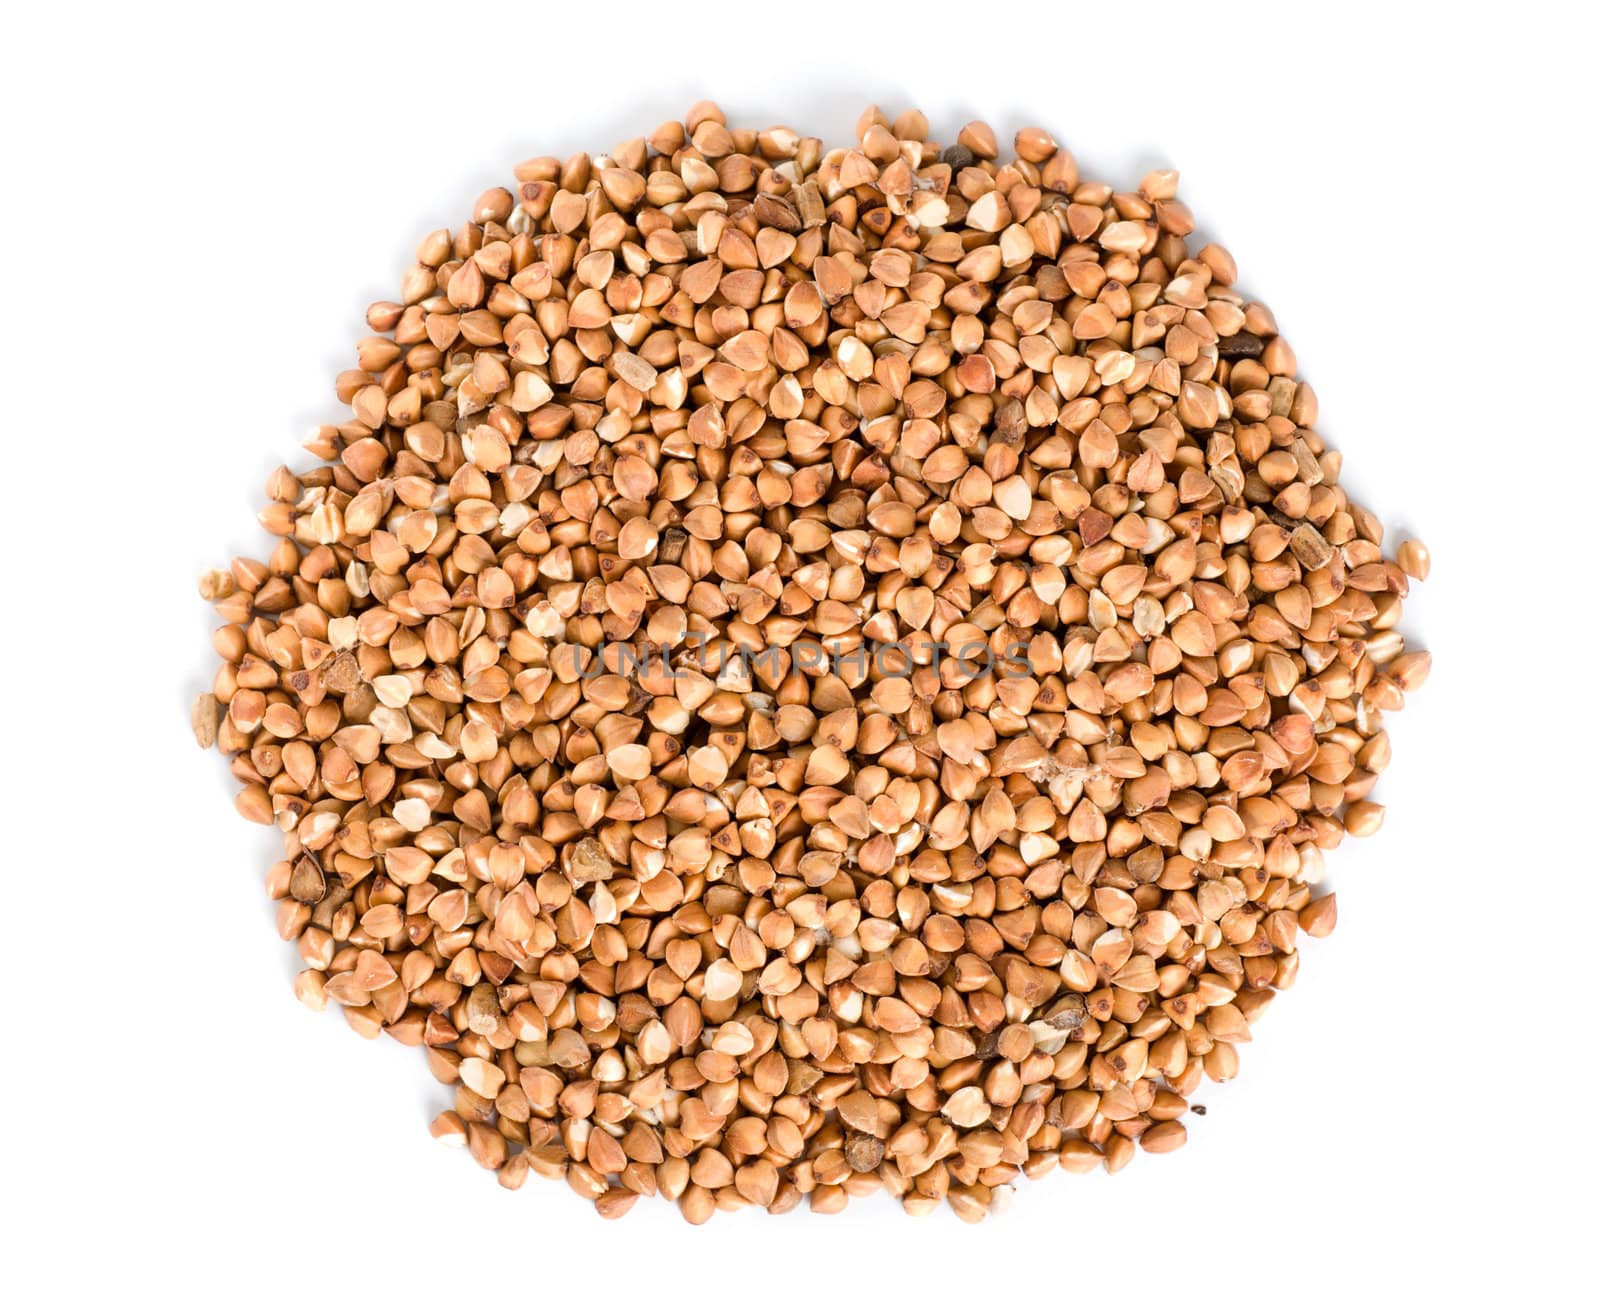 Raw buckwheat isolated by Givaga